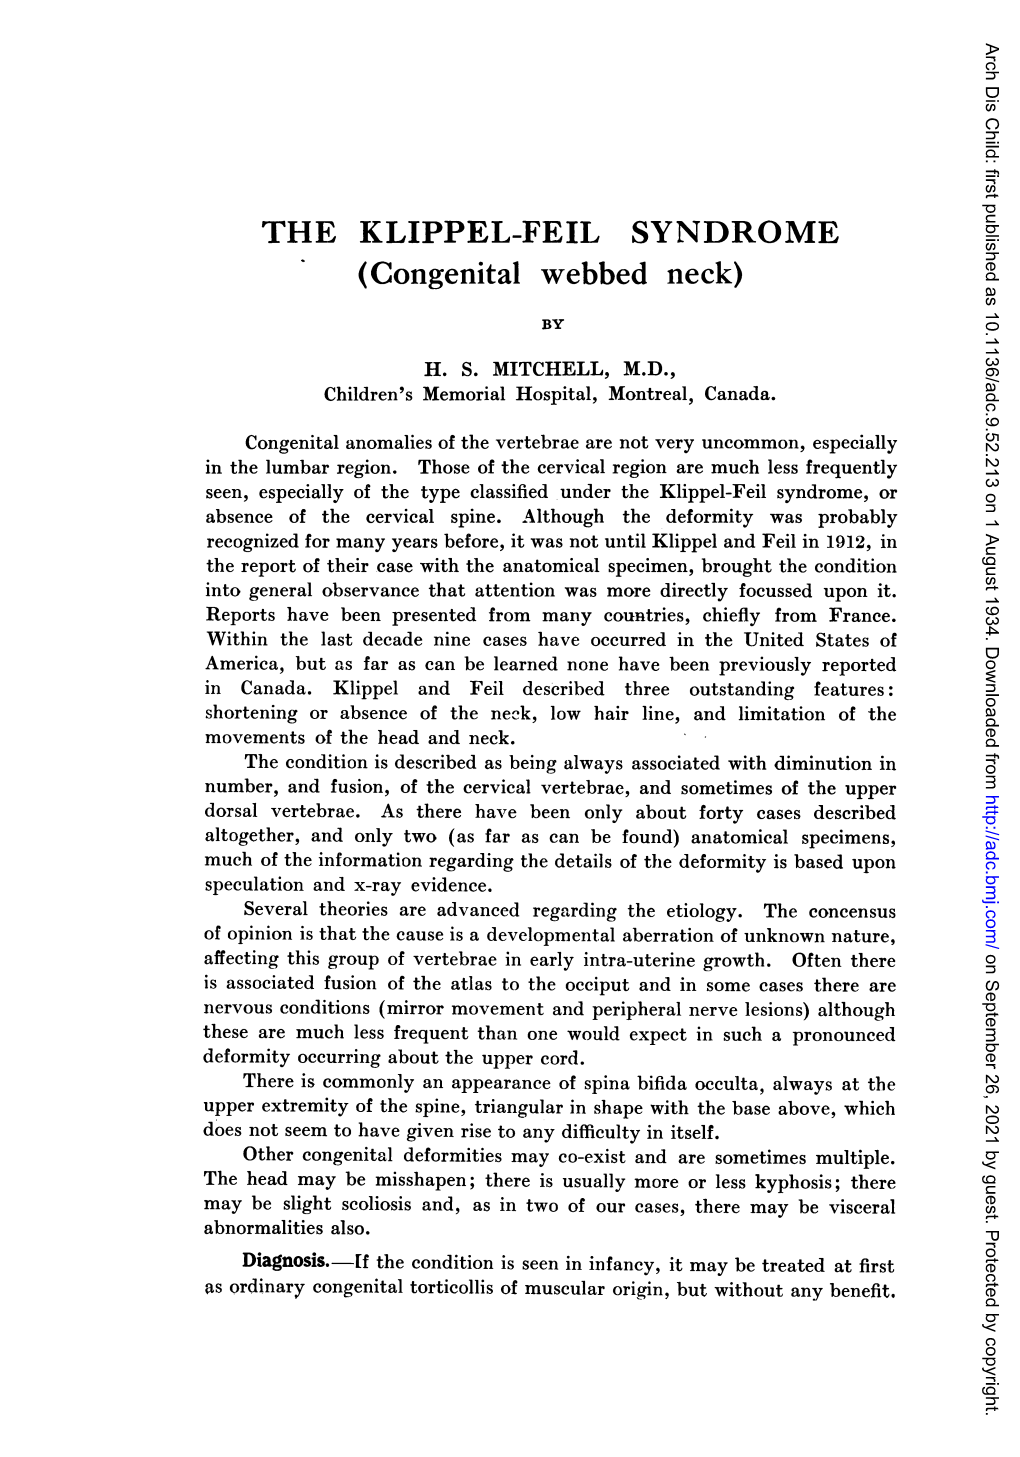 THE KLIPPEL-FEIL SYNDROME (Congenital Webbed Neck)